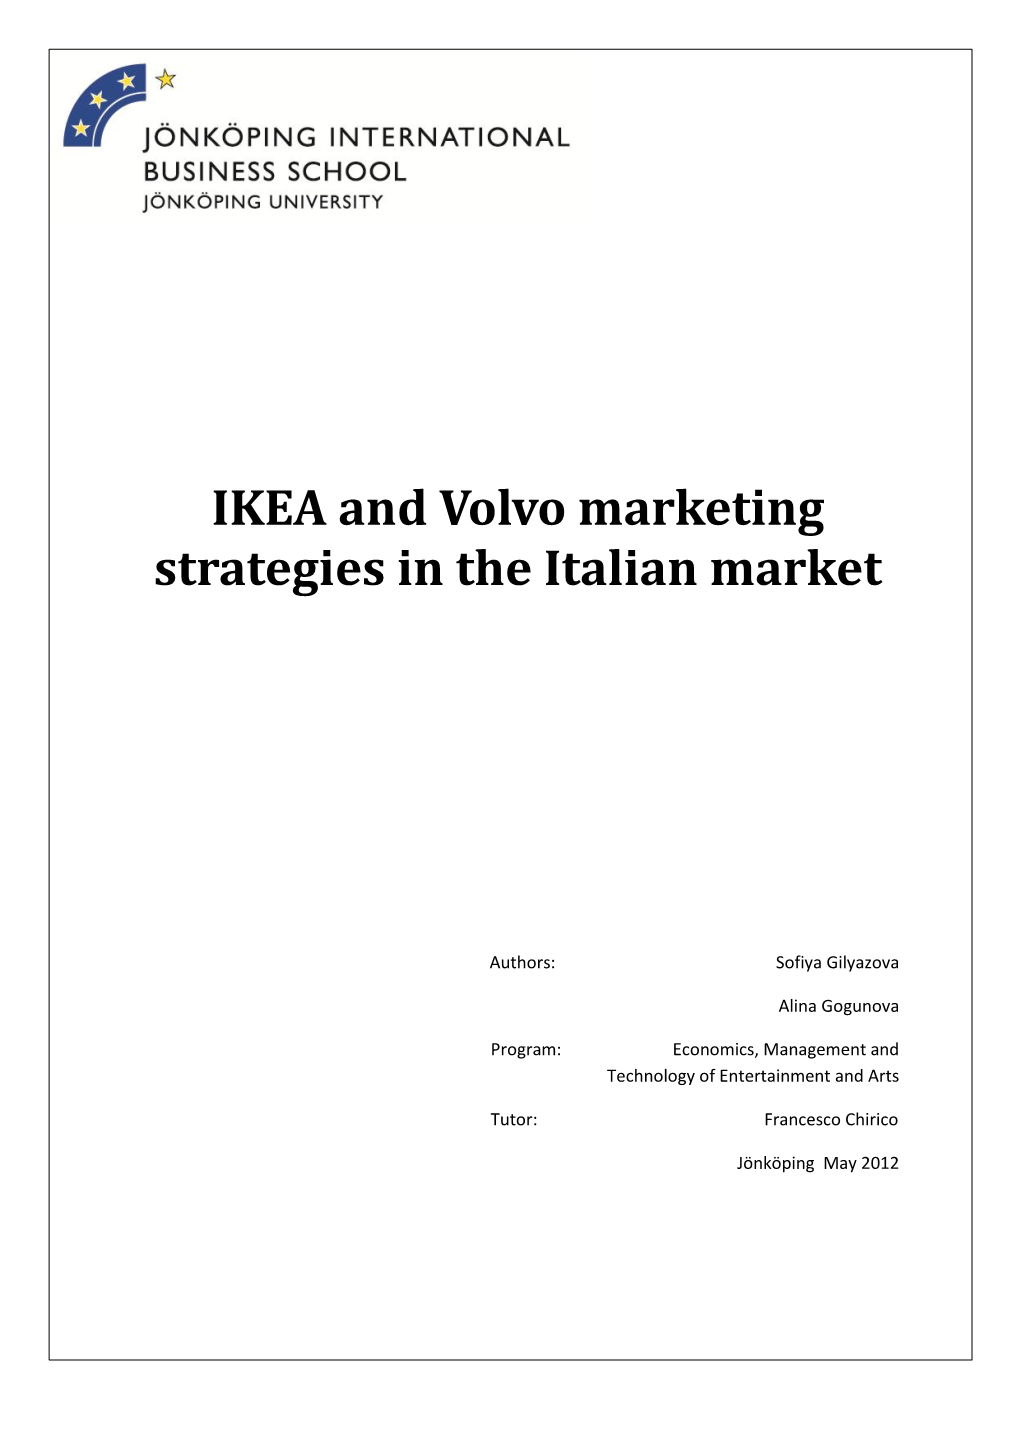 IKEA and Volvo Marketing Strategies in the Italian Market